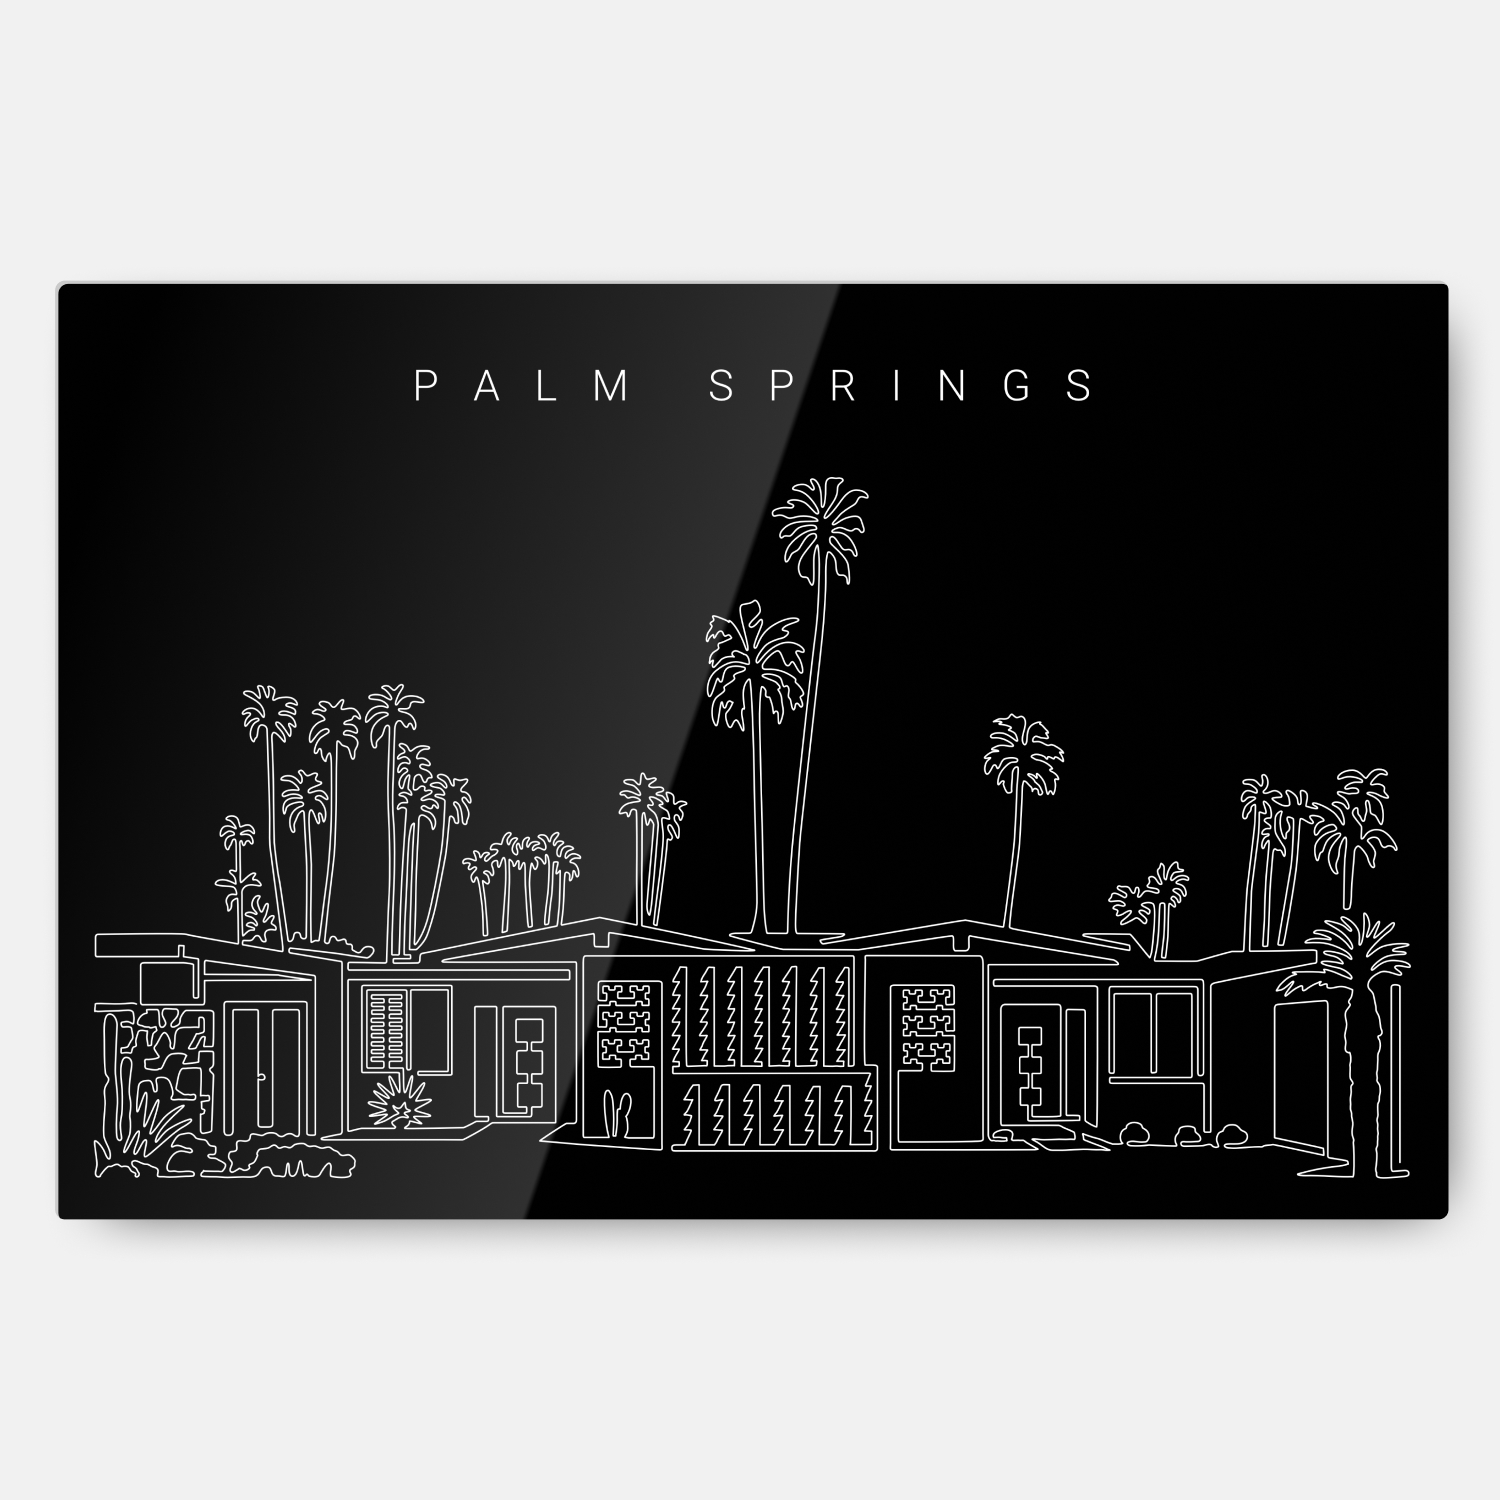 Palm Springs Metal Print Wall Art - Main - Dark